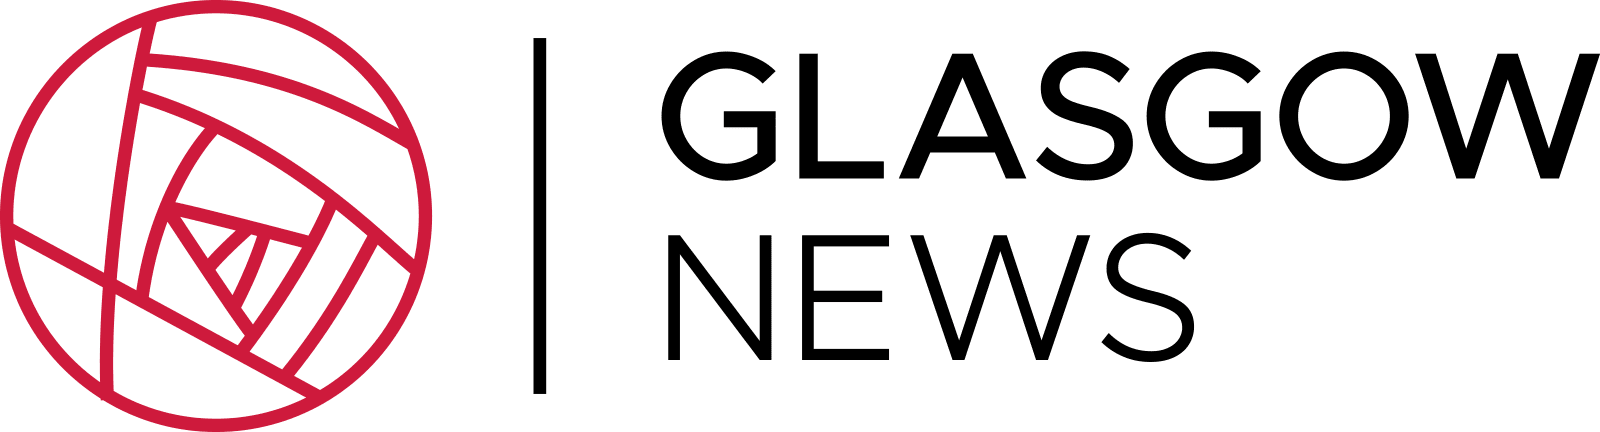 Glasgow and Scottish News